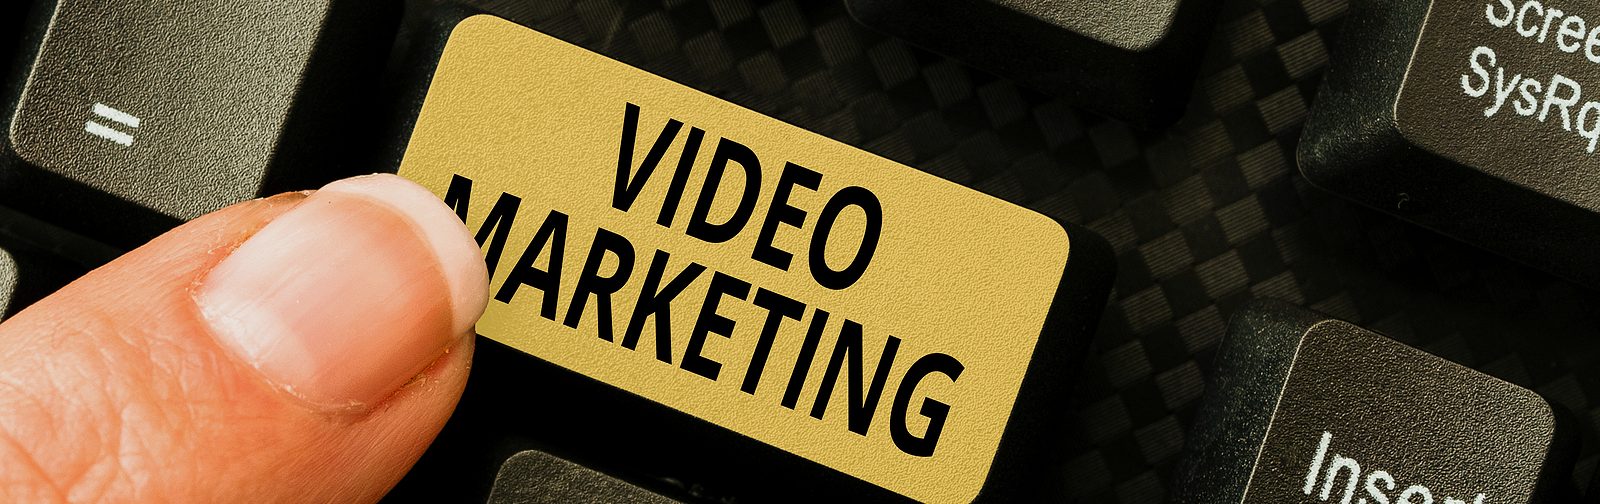 Online Marketing Trends_Video Marketing